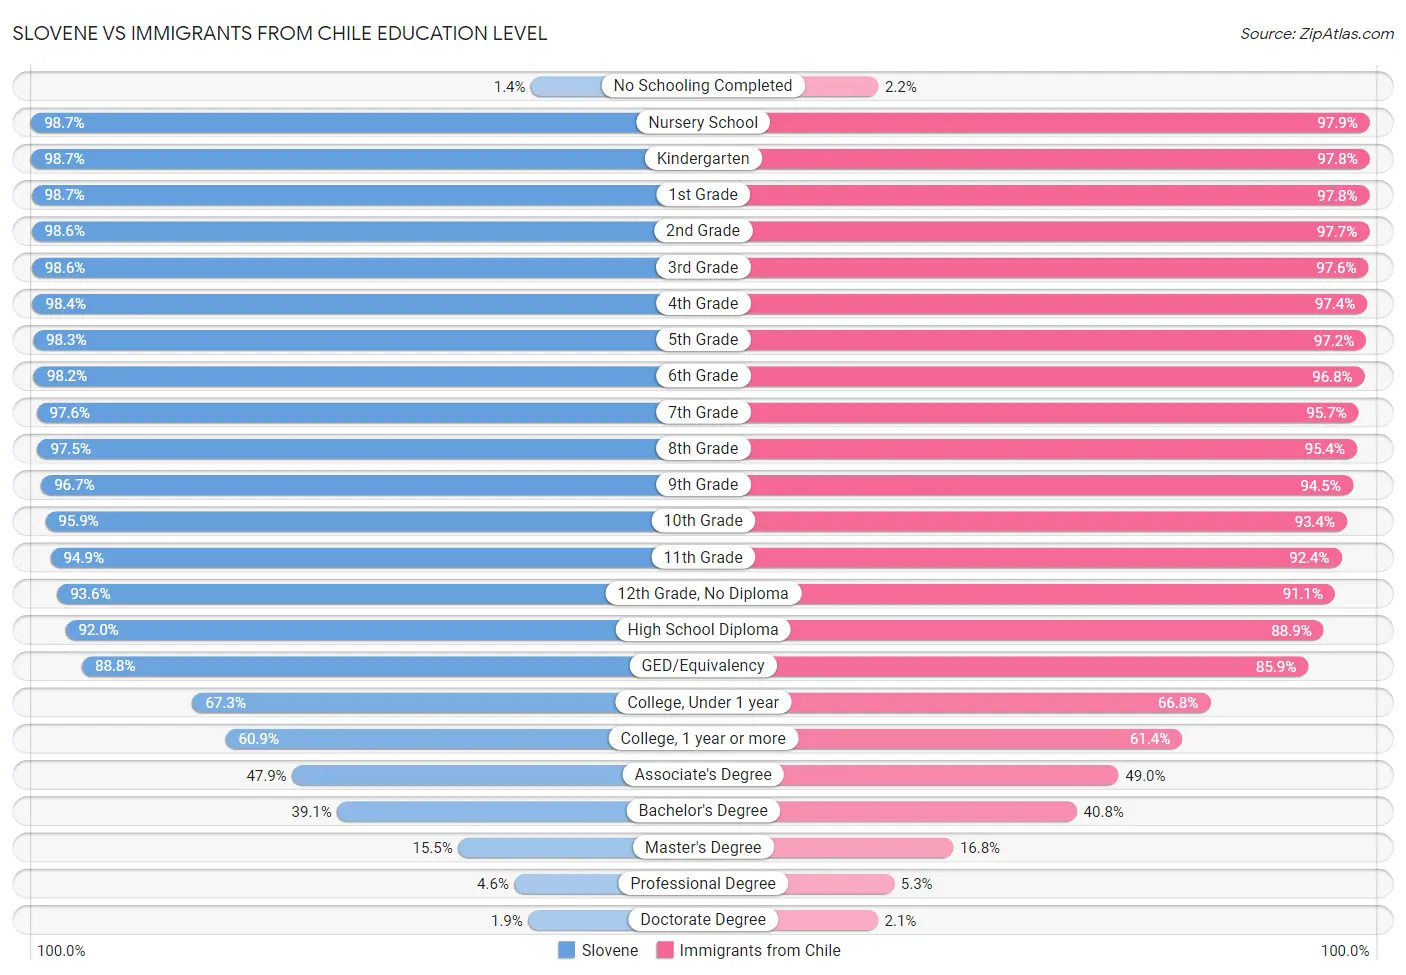 Slovene vs Immigrants from Chile Education Level